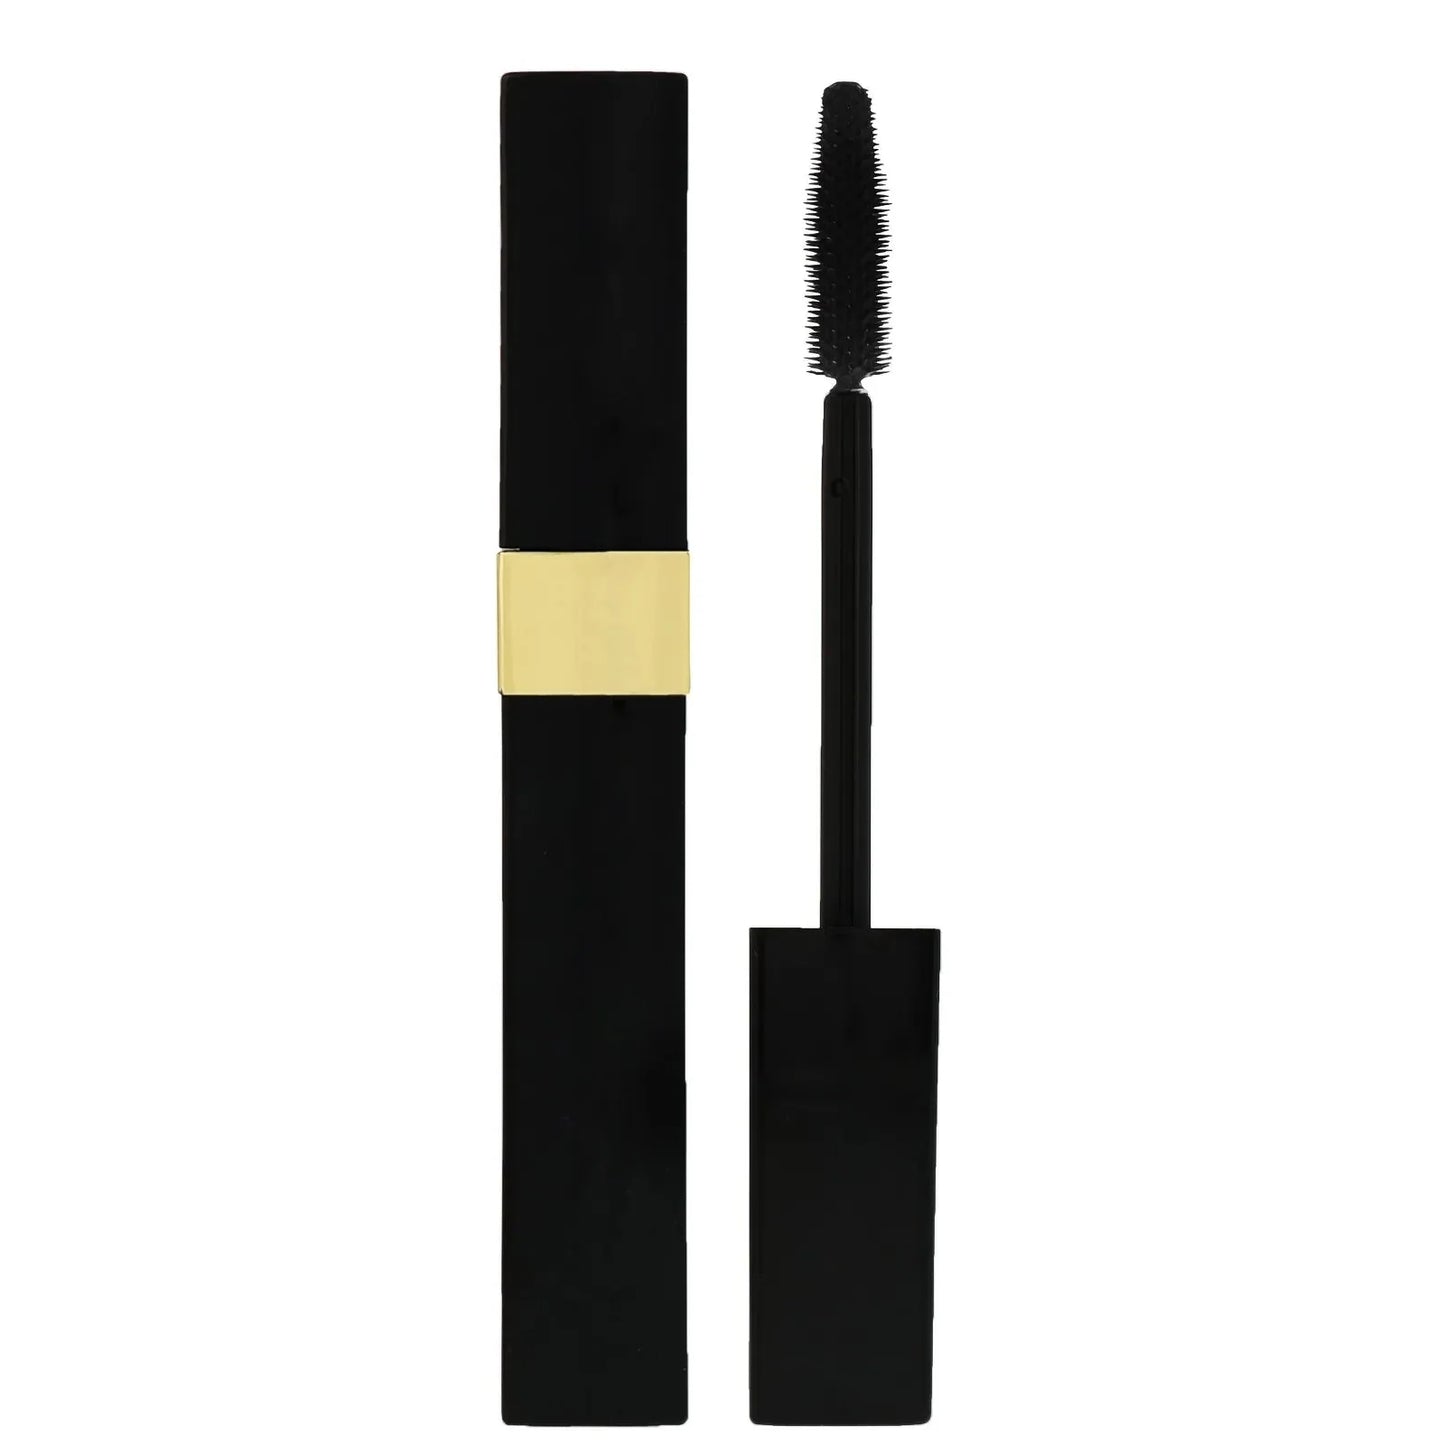 CHANEL  Chanel Inimitable Multi Dimensional Mascara - 10 Noir Black